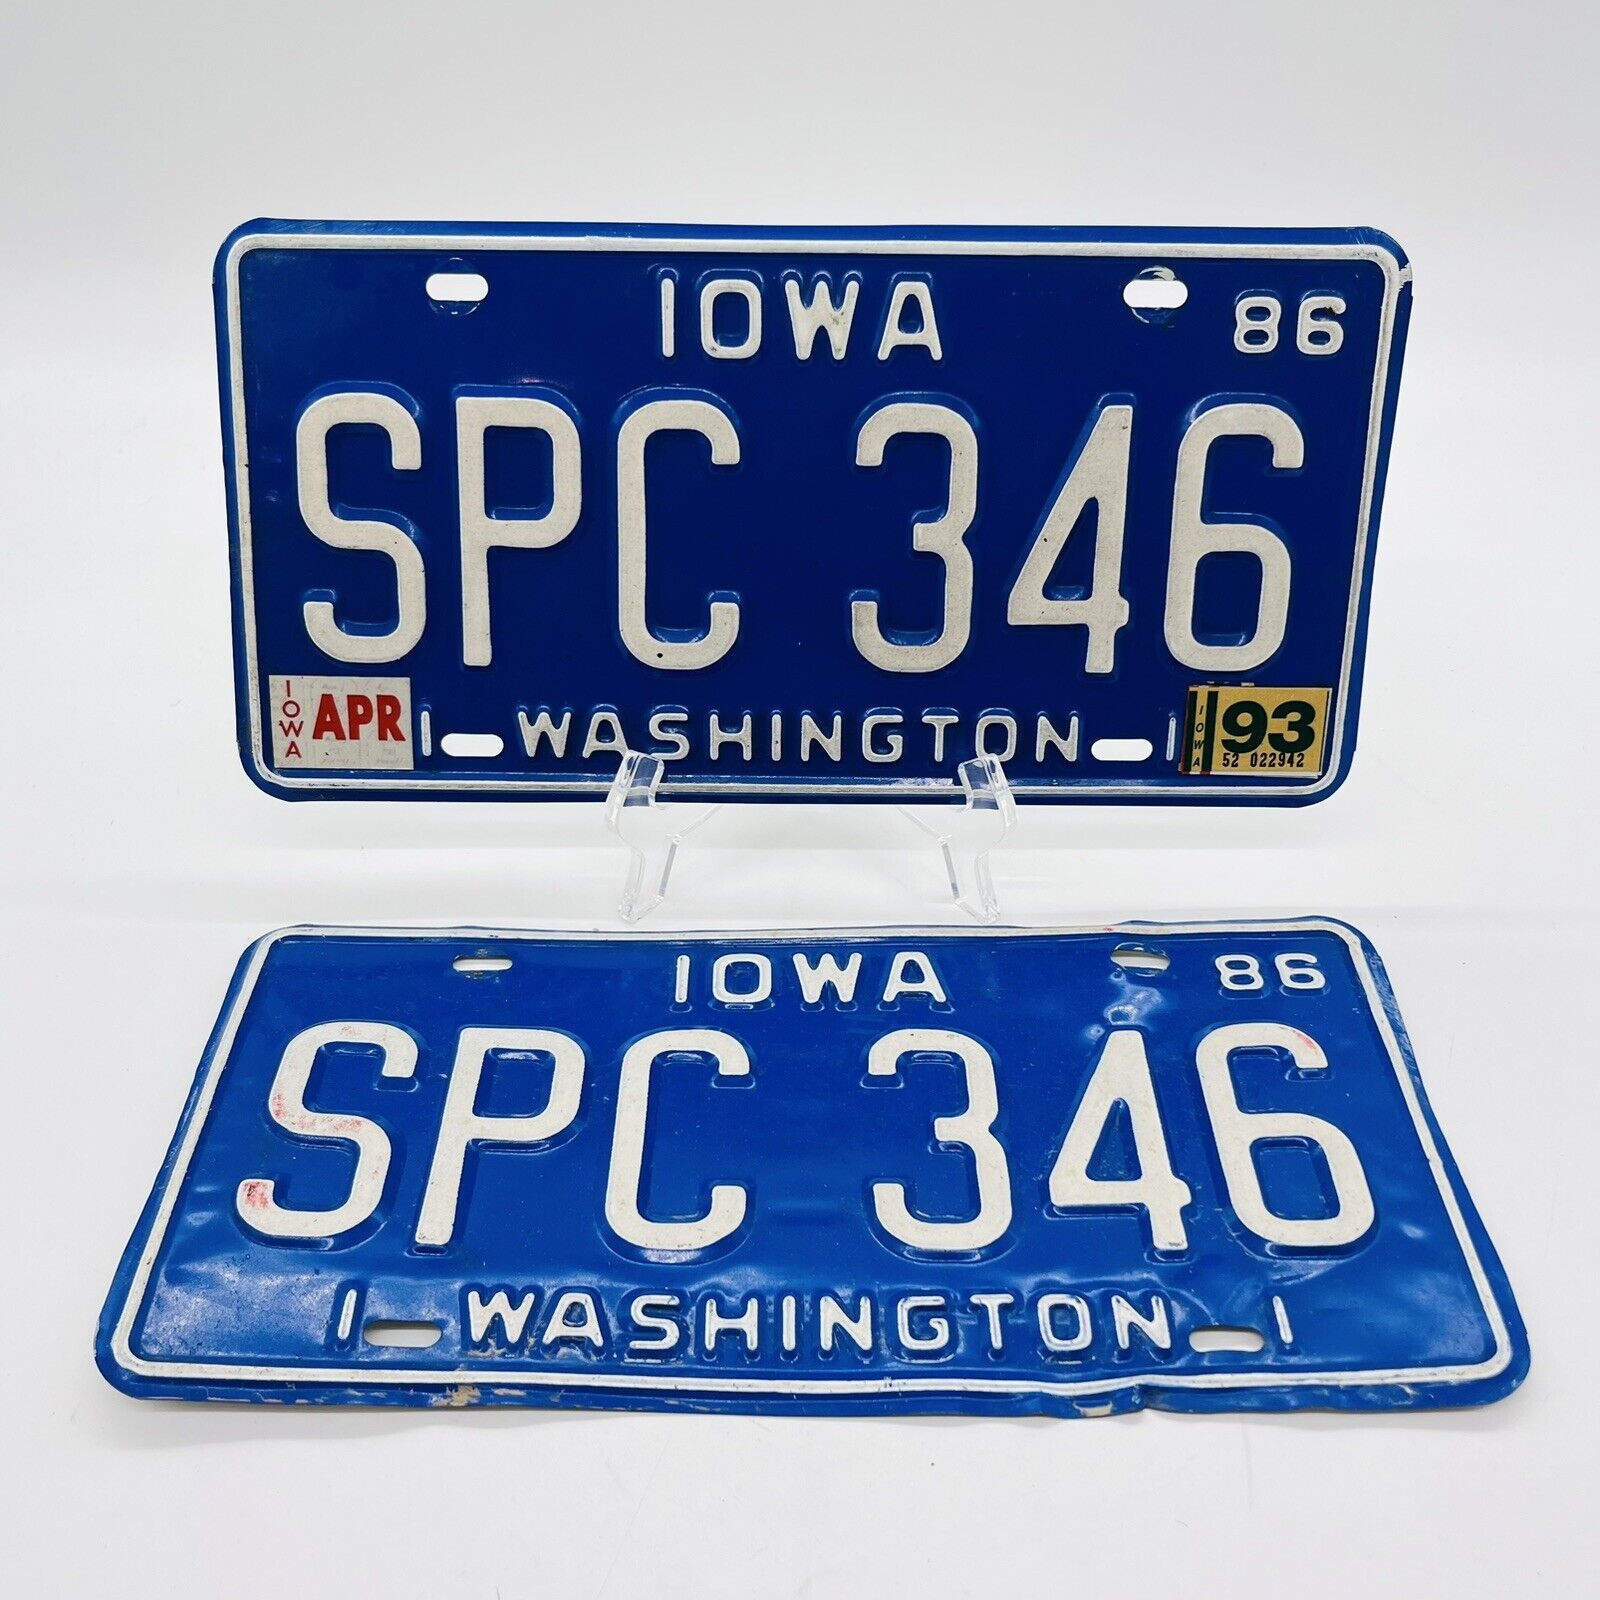 Iowa Vtg 1986 Collectible License Plate Original Pair Set White On Blue SPC 346